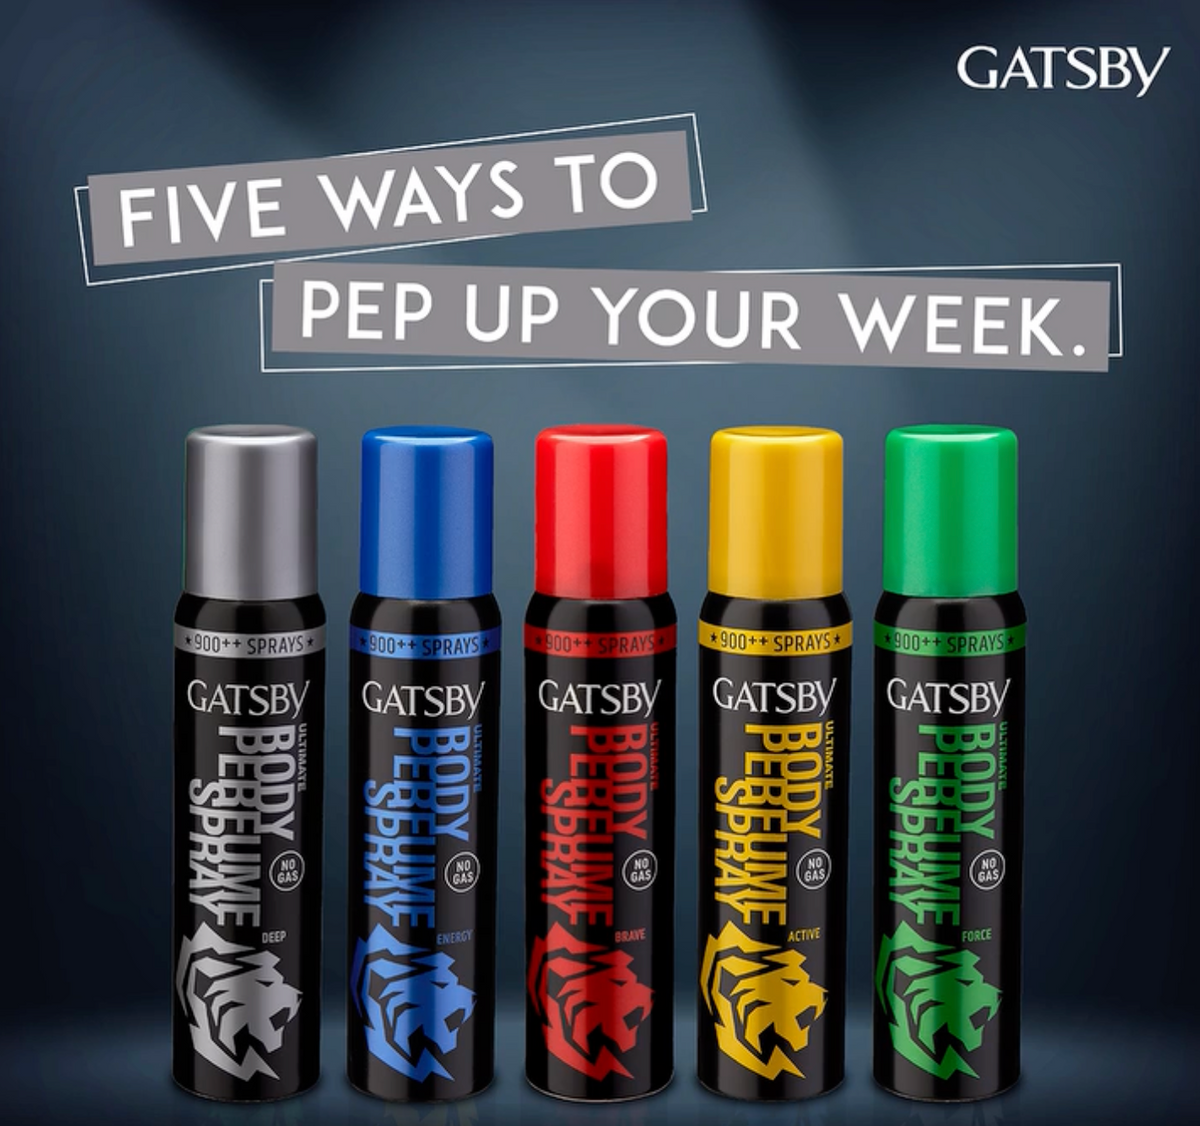 Gatsby Ultimate Body Perfume Spray - Force, 120 ml : Buy 1 Get 1 Free! Gardenia Cosmotrade LLP